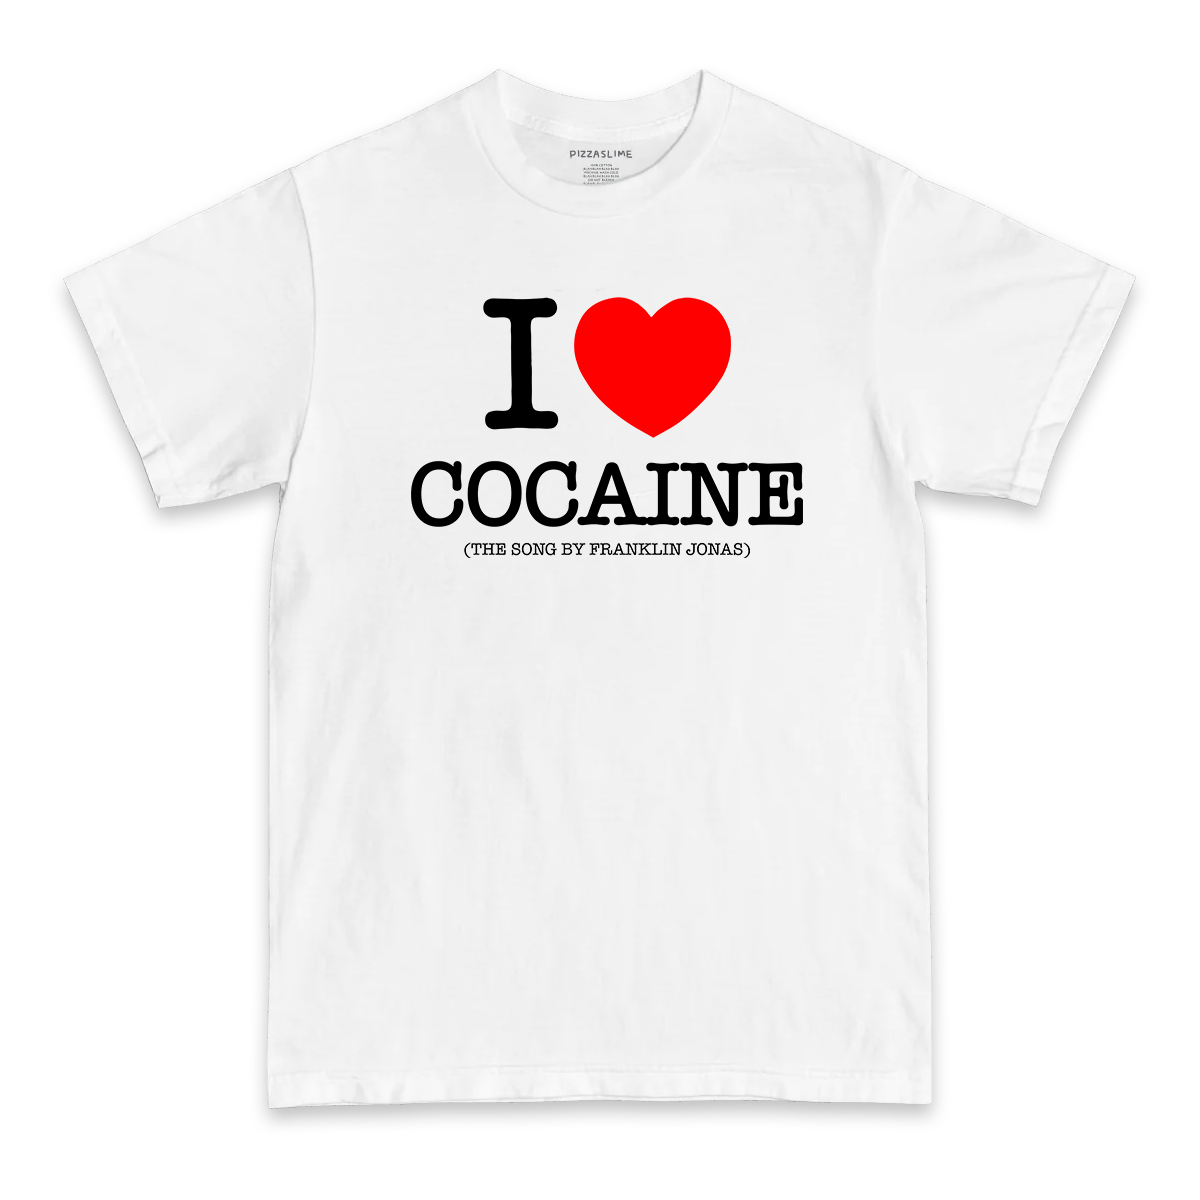 Franklin Jonas x Pizzaslime "I Love Cocaine (the song by Franklin Jonas)" WHITE